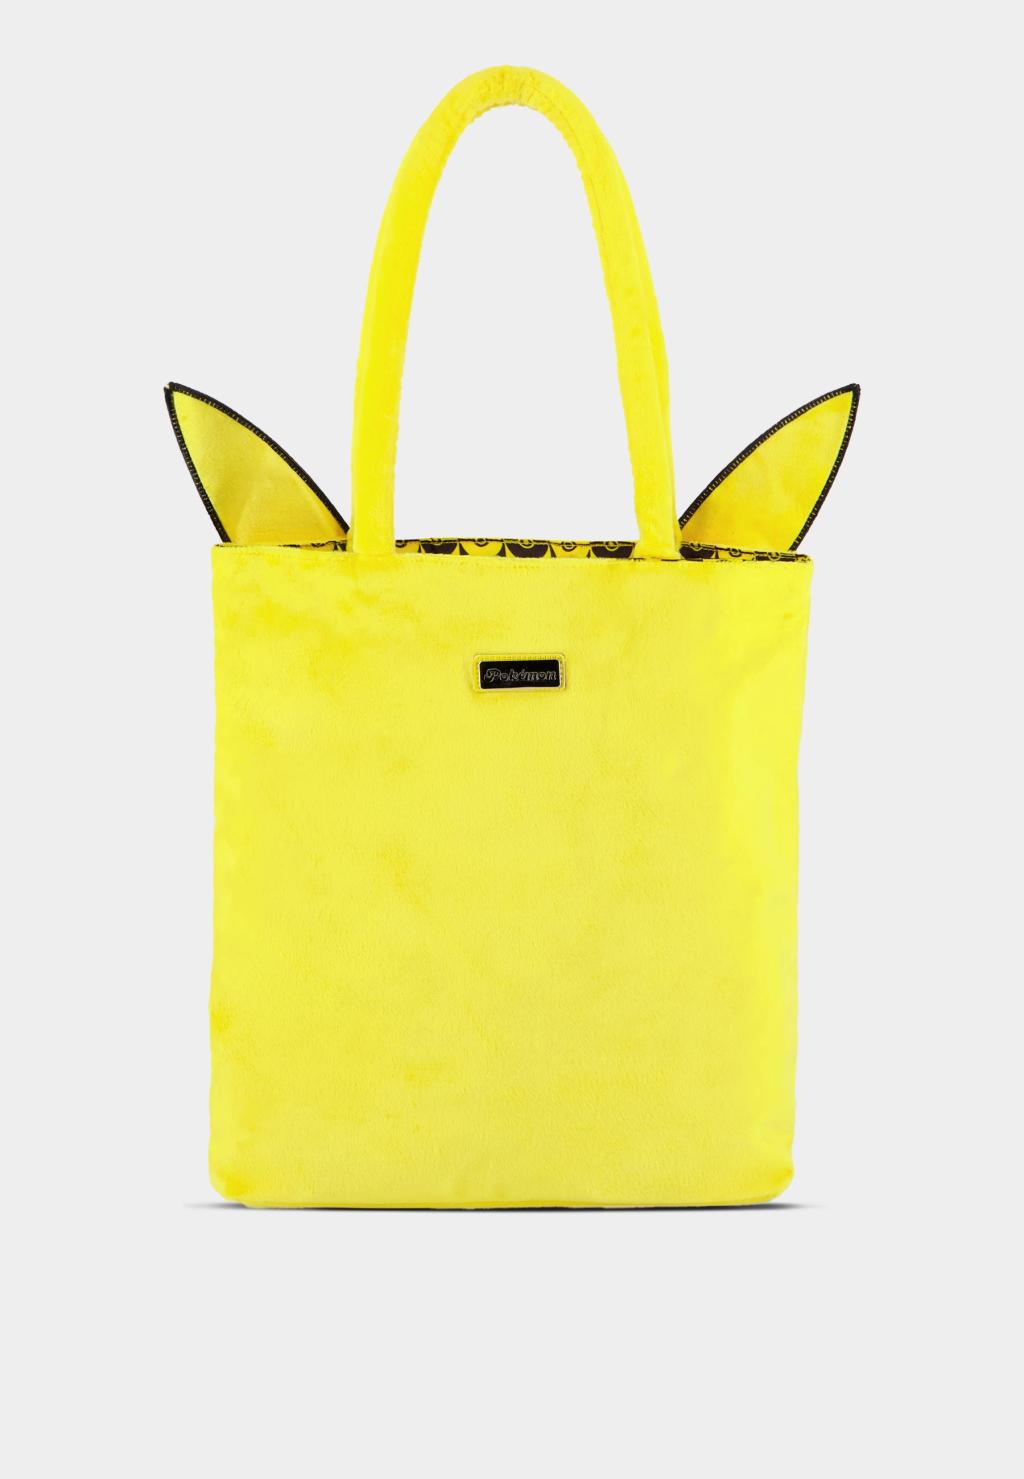 POKEMON - Pikachu - Heady - Totebag Novelty '37x35x10cm'